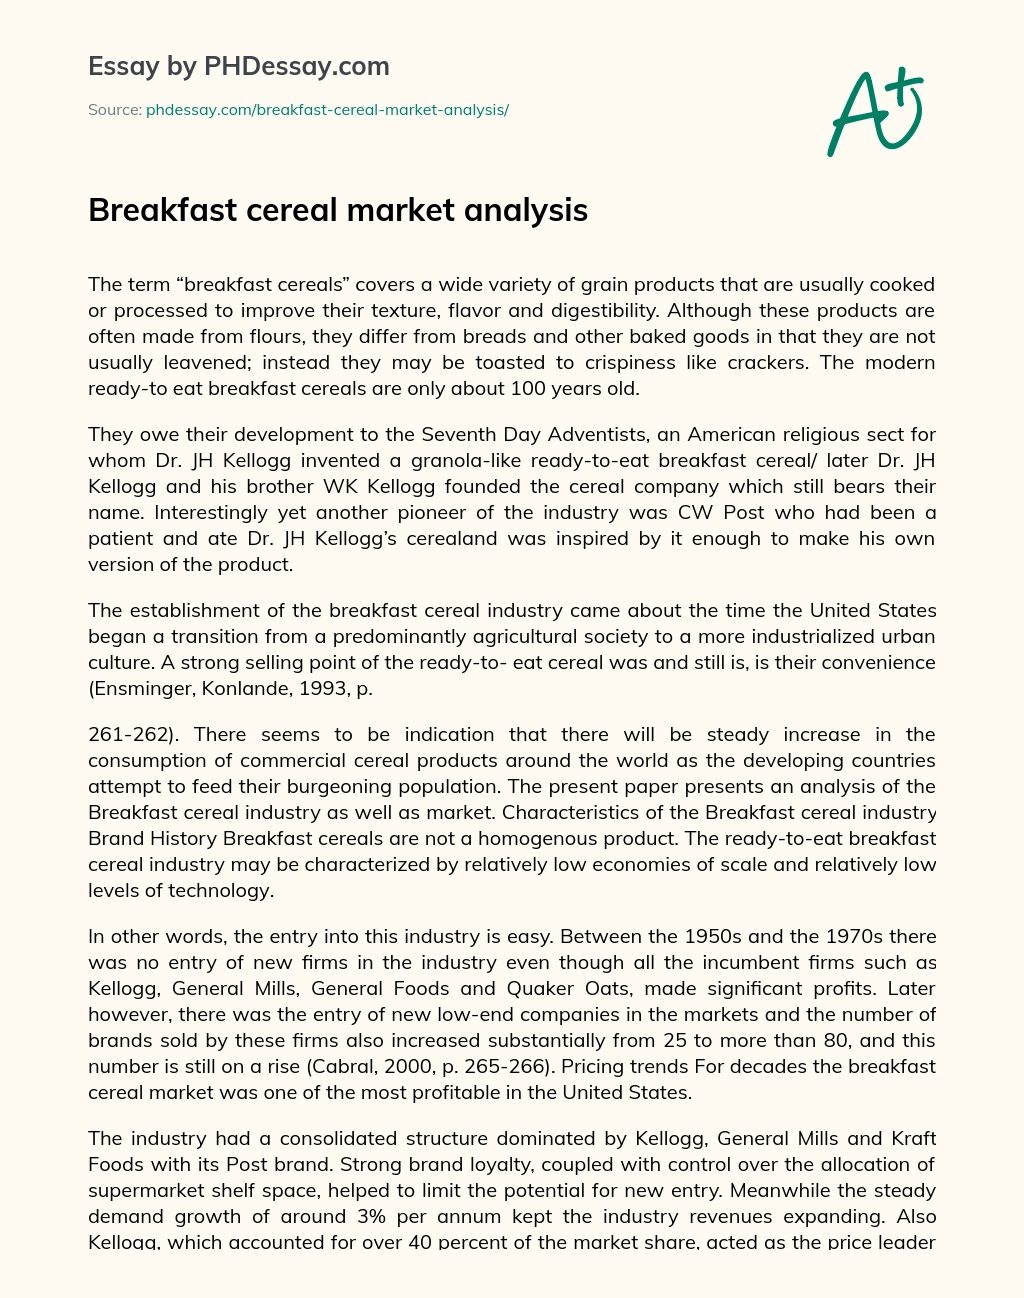 Breakfast cereal market analysis essay